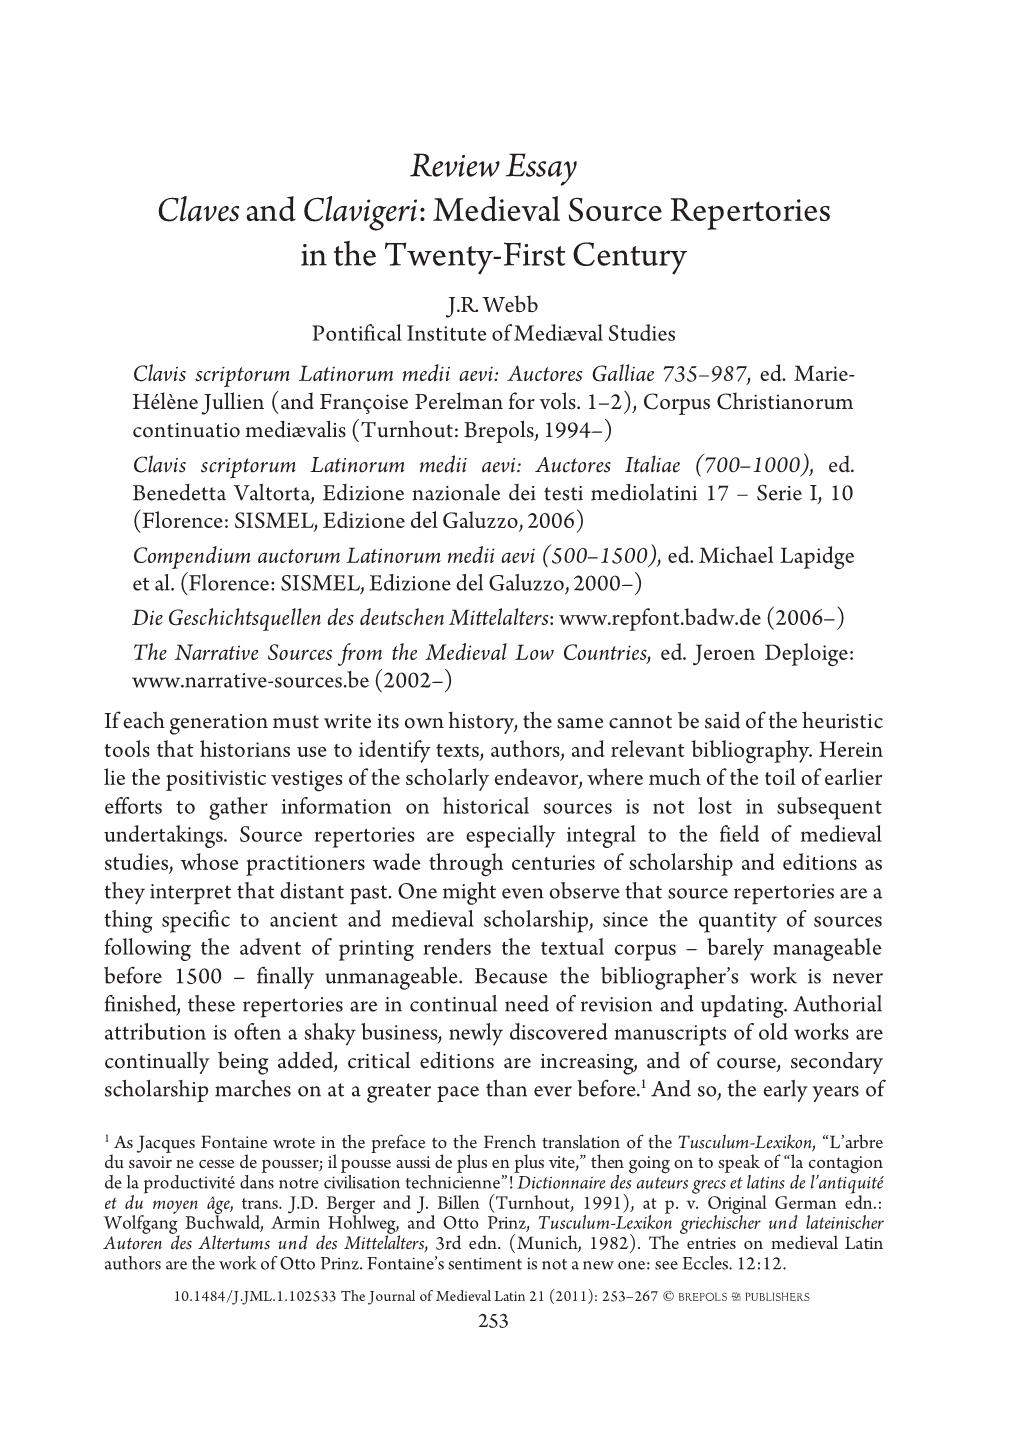 Medieval Source Repertories in the Twenty-First Century J.R